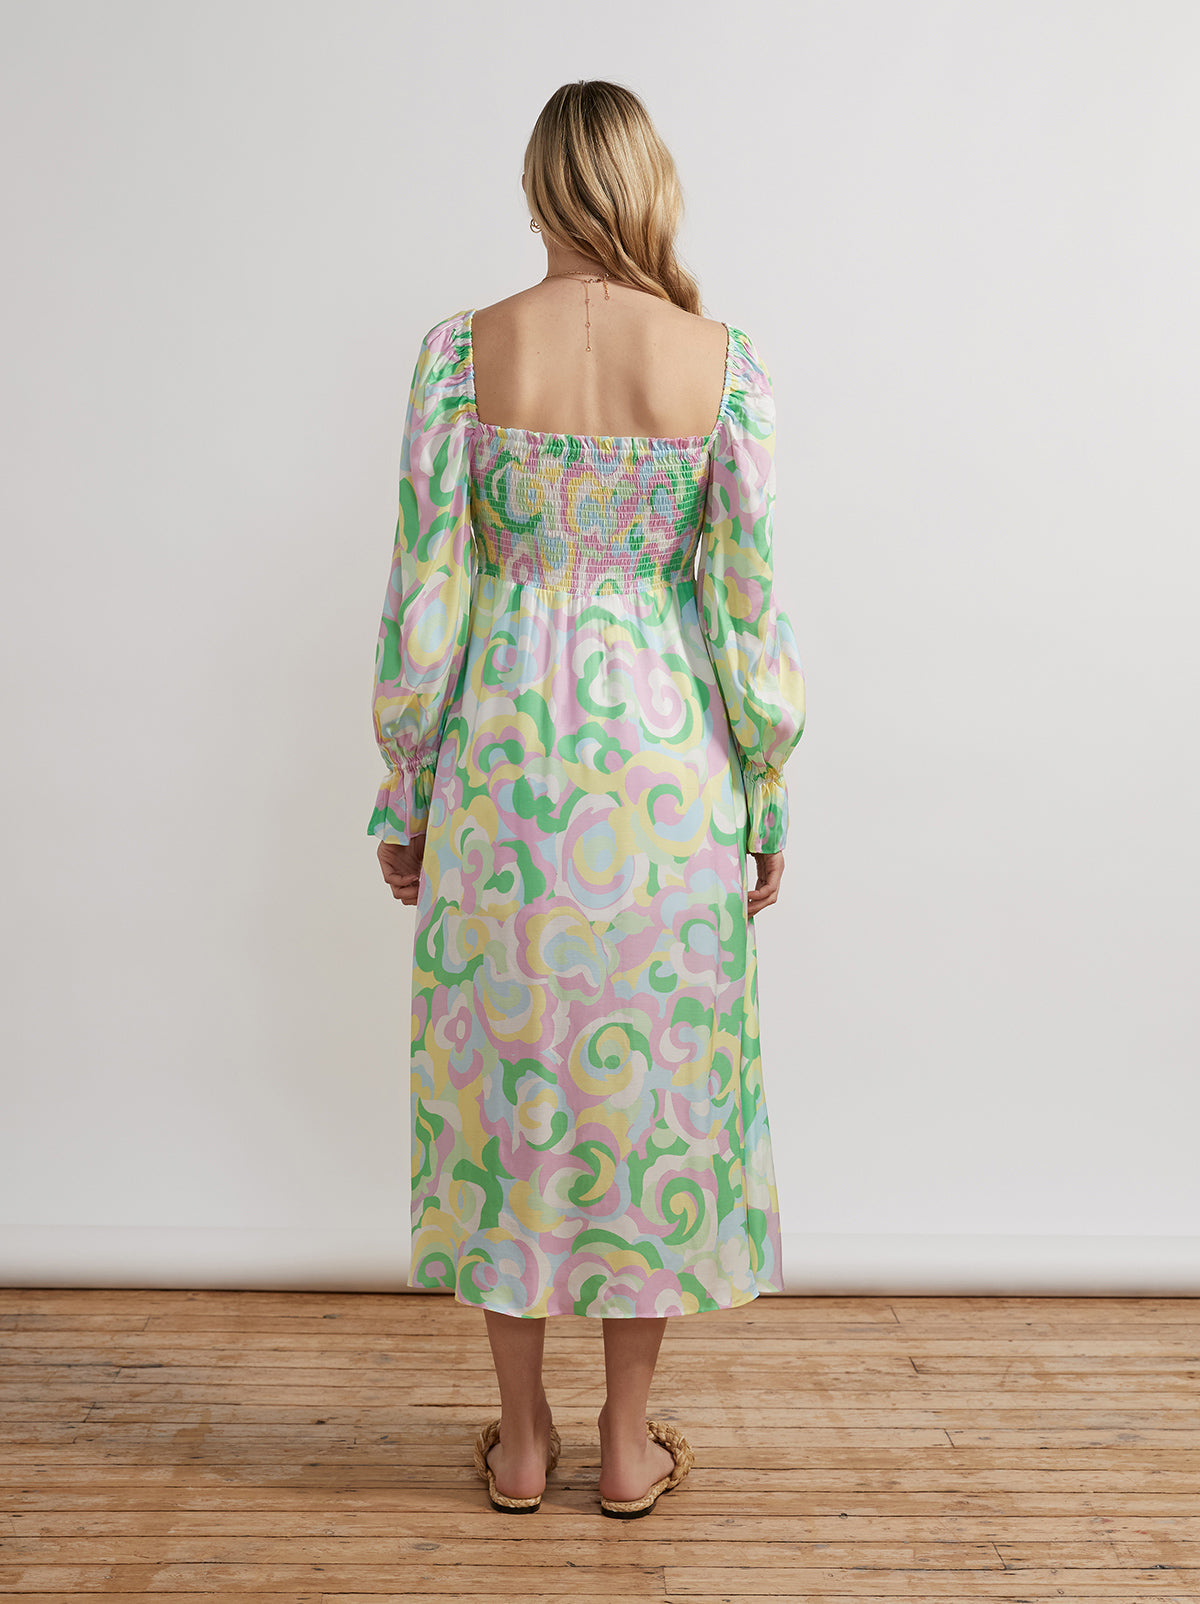 Jolene Multi Floral Swirl Dress by KITRI Studio